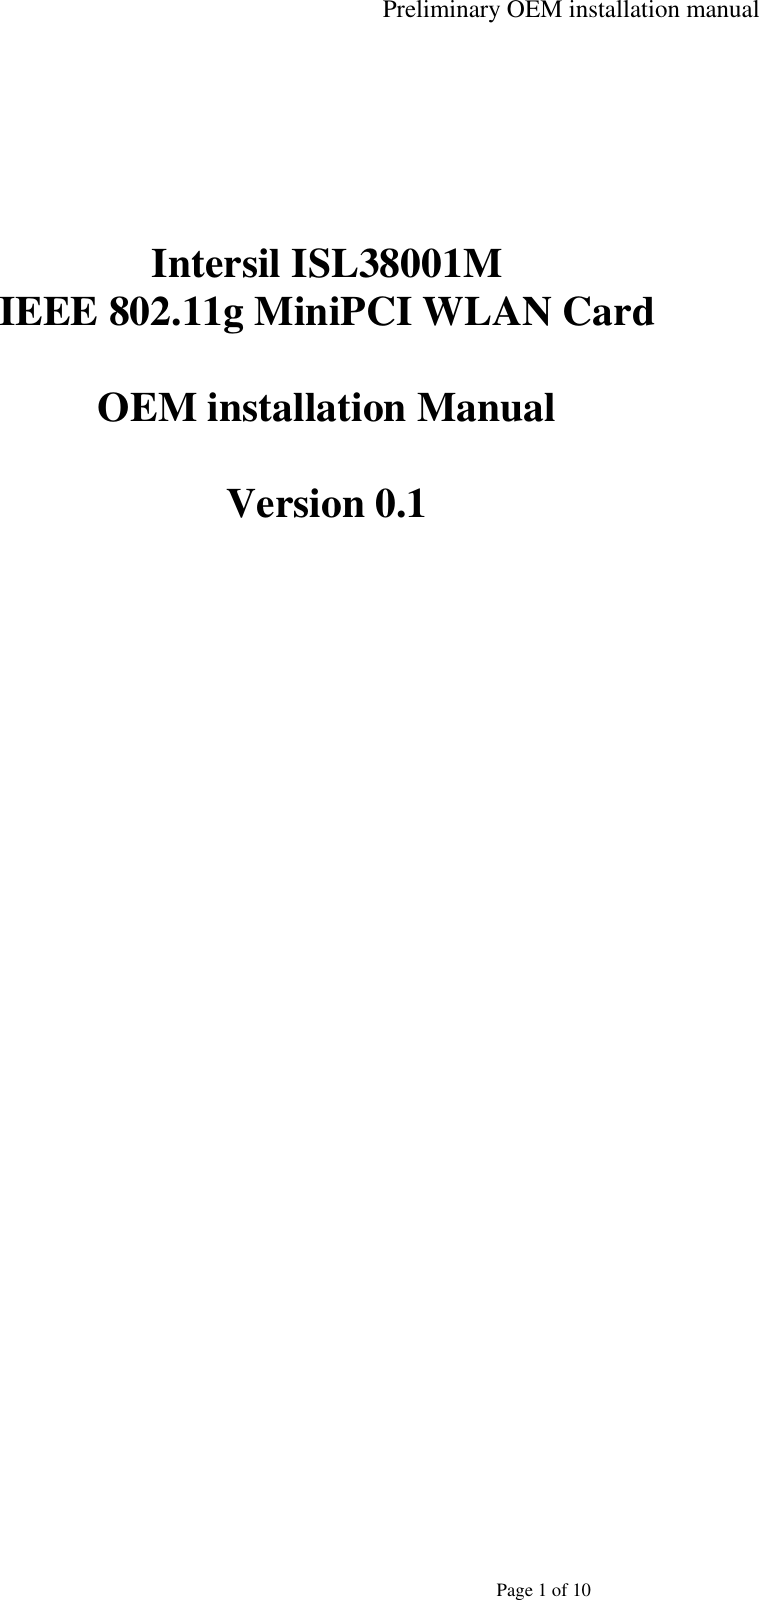 Preliminary OEM installation manual   Page 1 of 10        Intersil ISL38001M IEEE 802.11g MiniPCI WLAN Card  OEM installation Manual  Version 0.1  